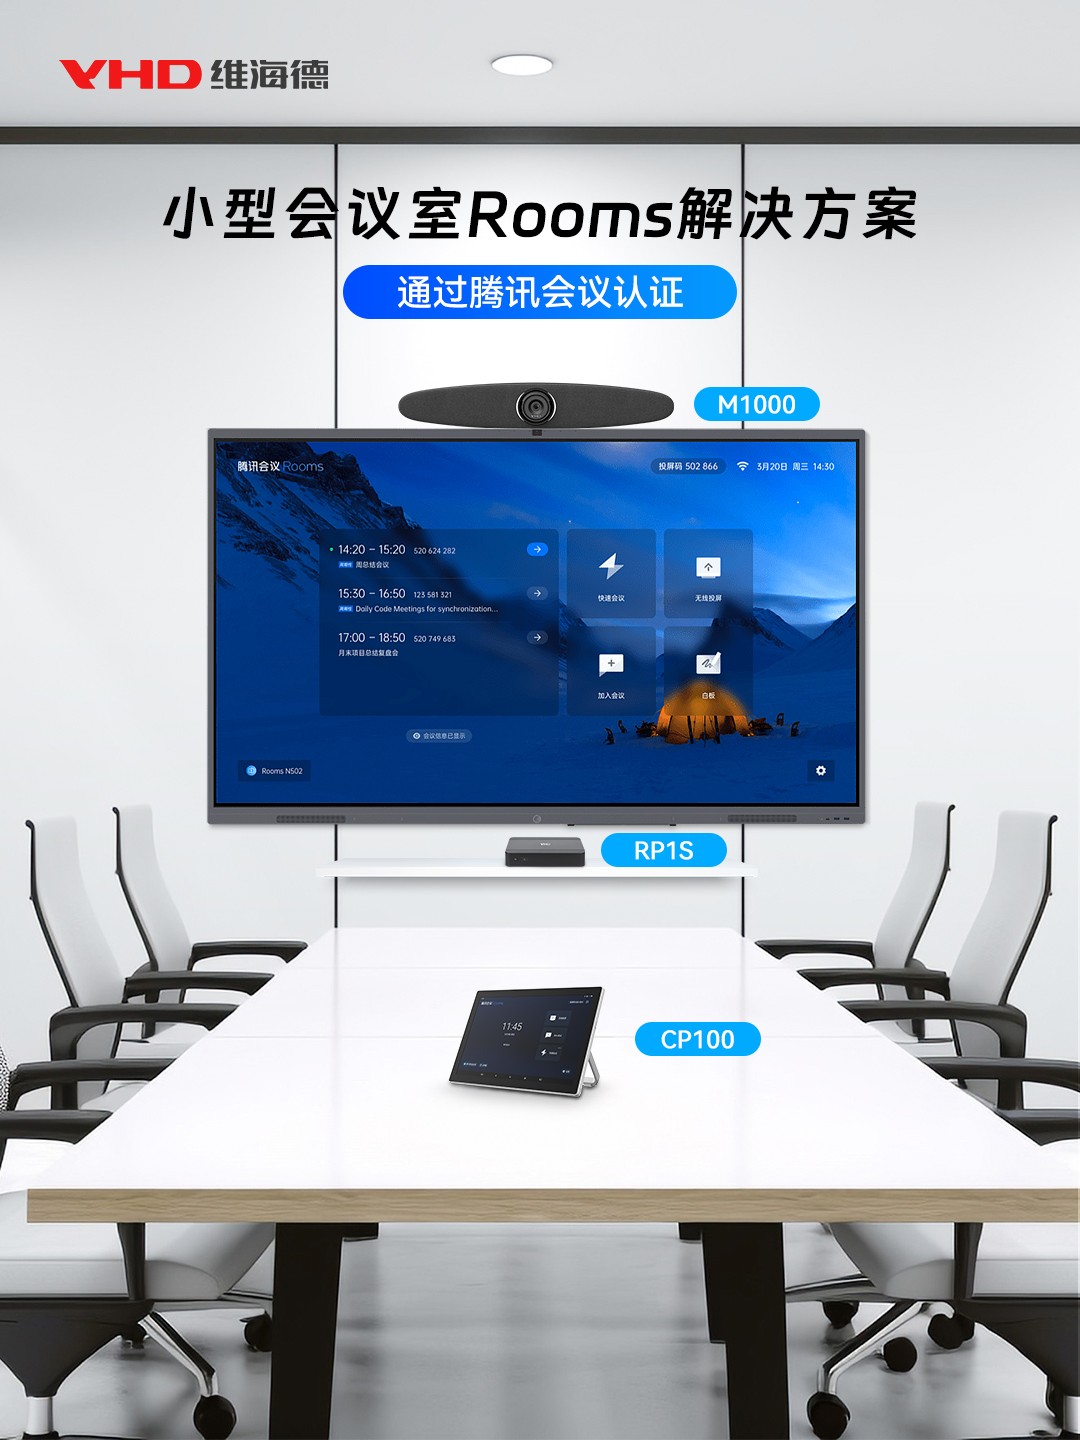 VHD维海德小型会议室Rooms解决方案通过腾讯会议认证